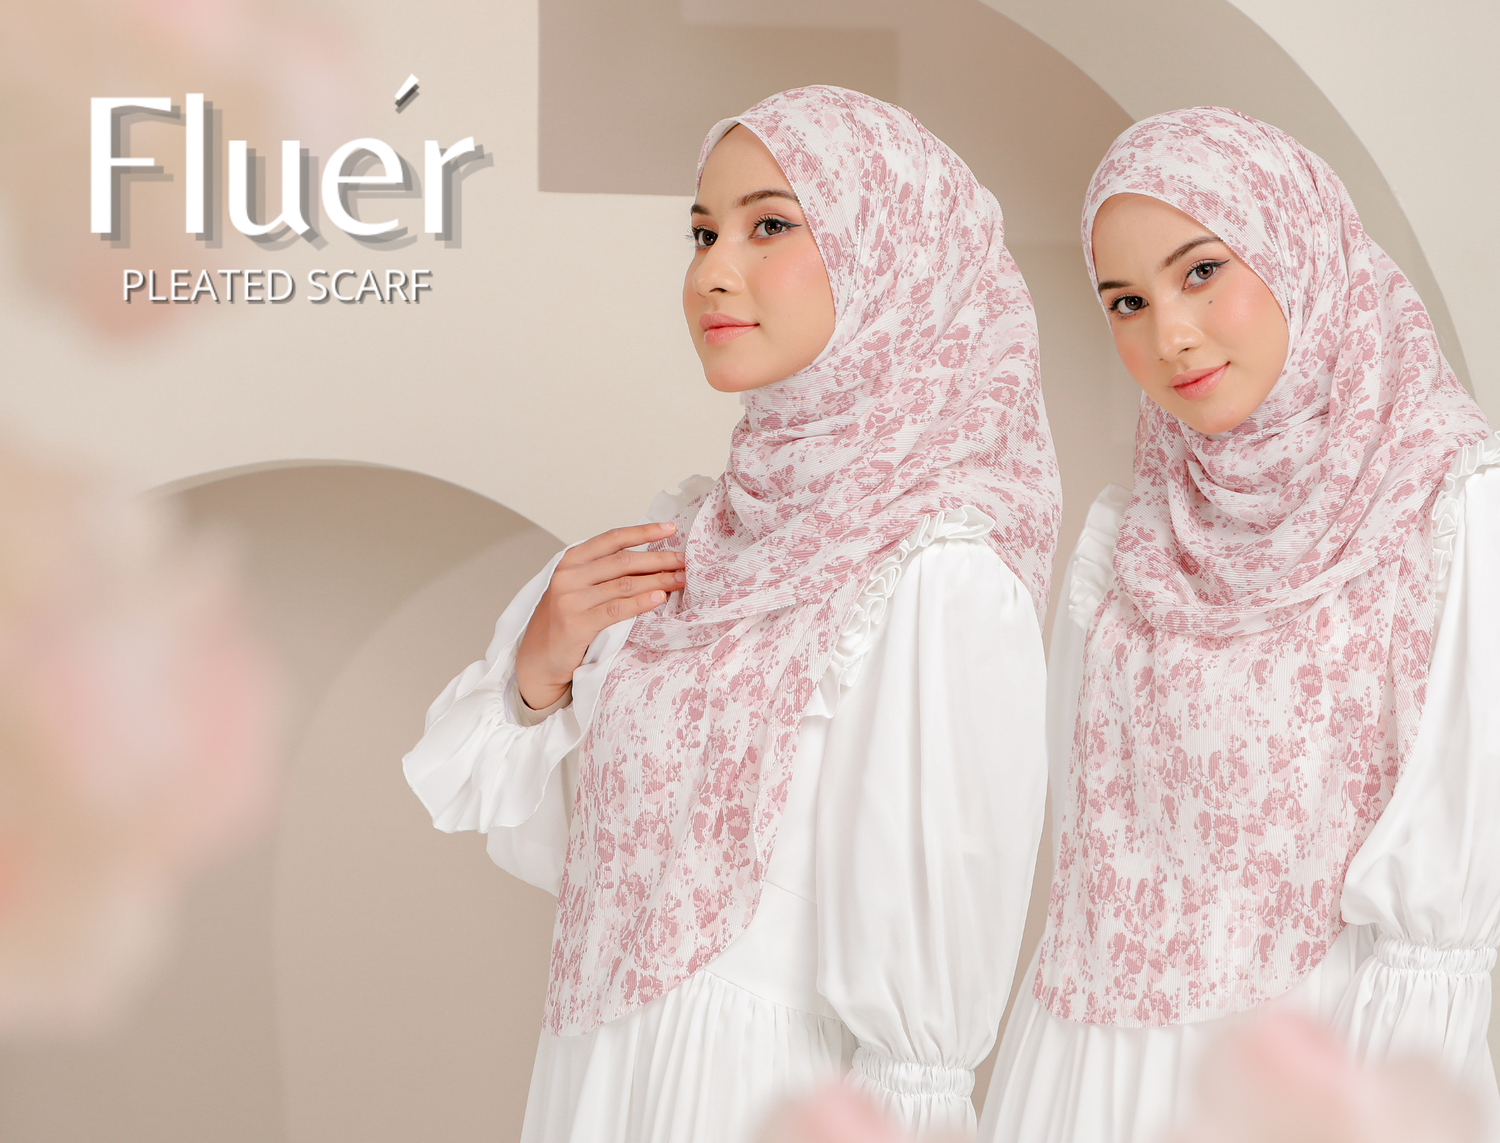 TUDUNG - ZEEZ Hijab & Scarves | 